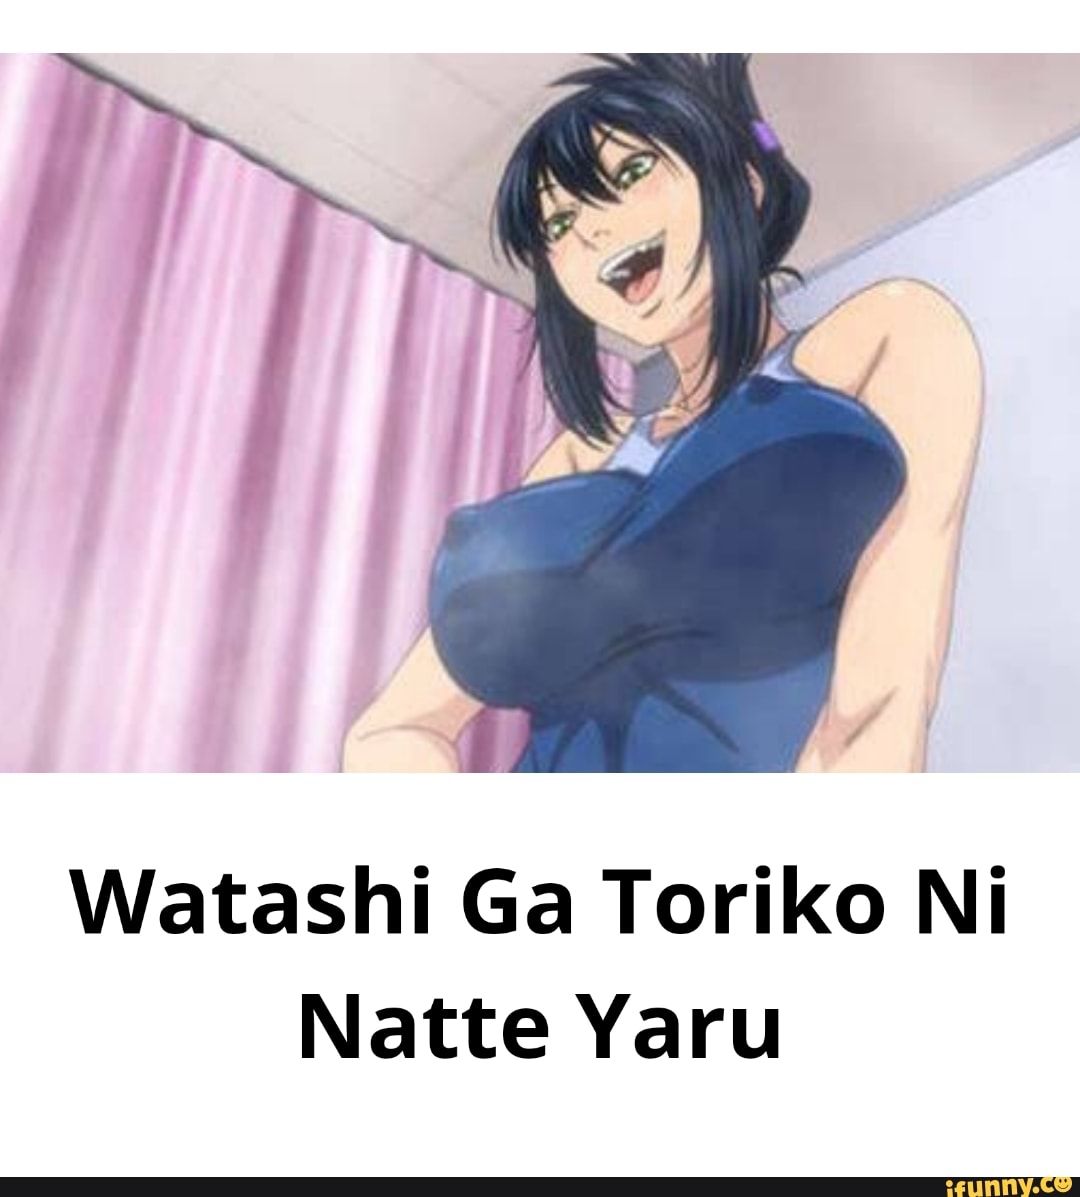 cassie hyatt recommends Watashi Ga Toriko Ni